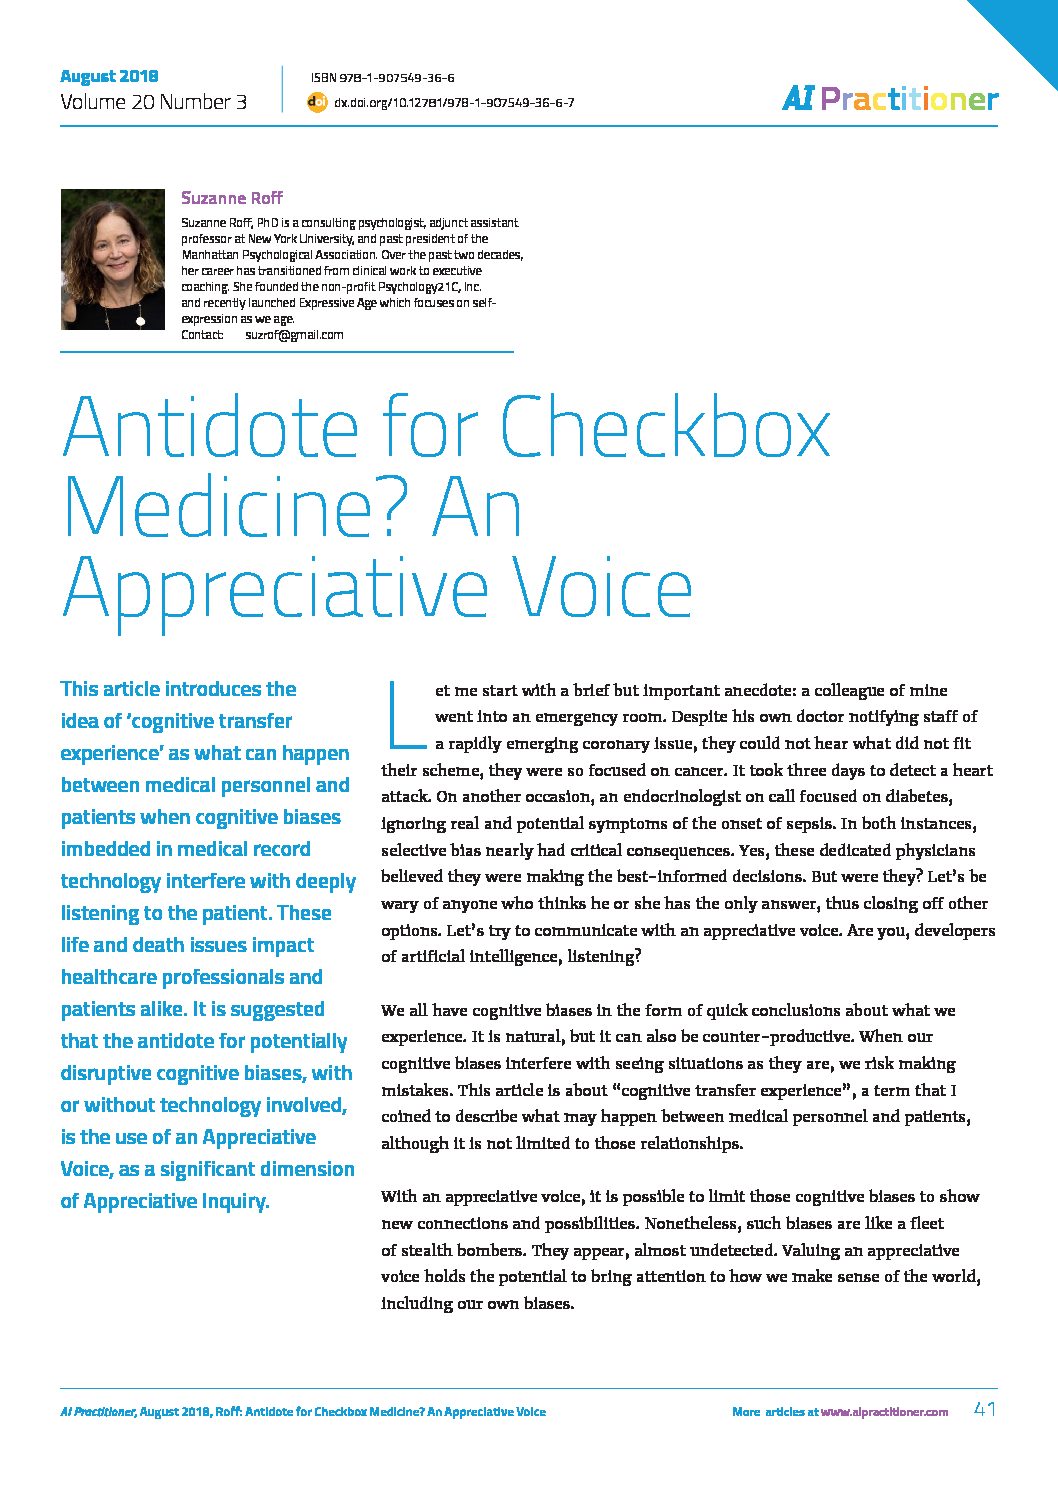 aip-august18-appreciative-voice-antidote-for-checkbox-medecine